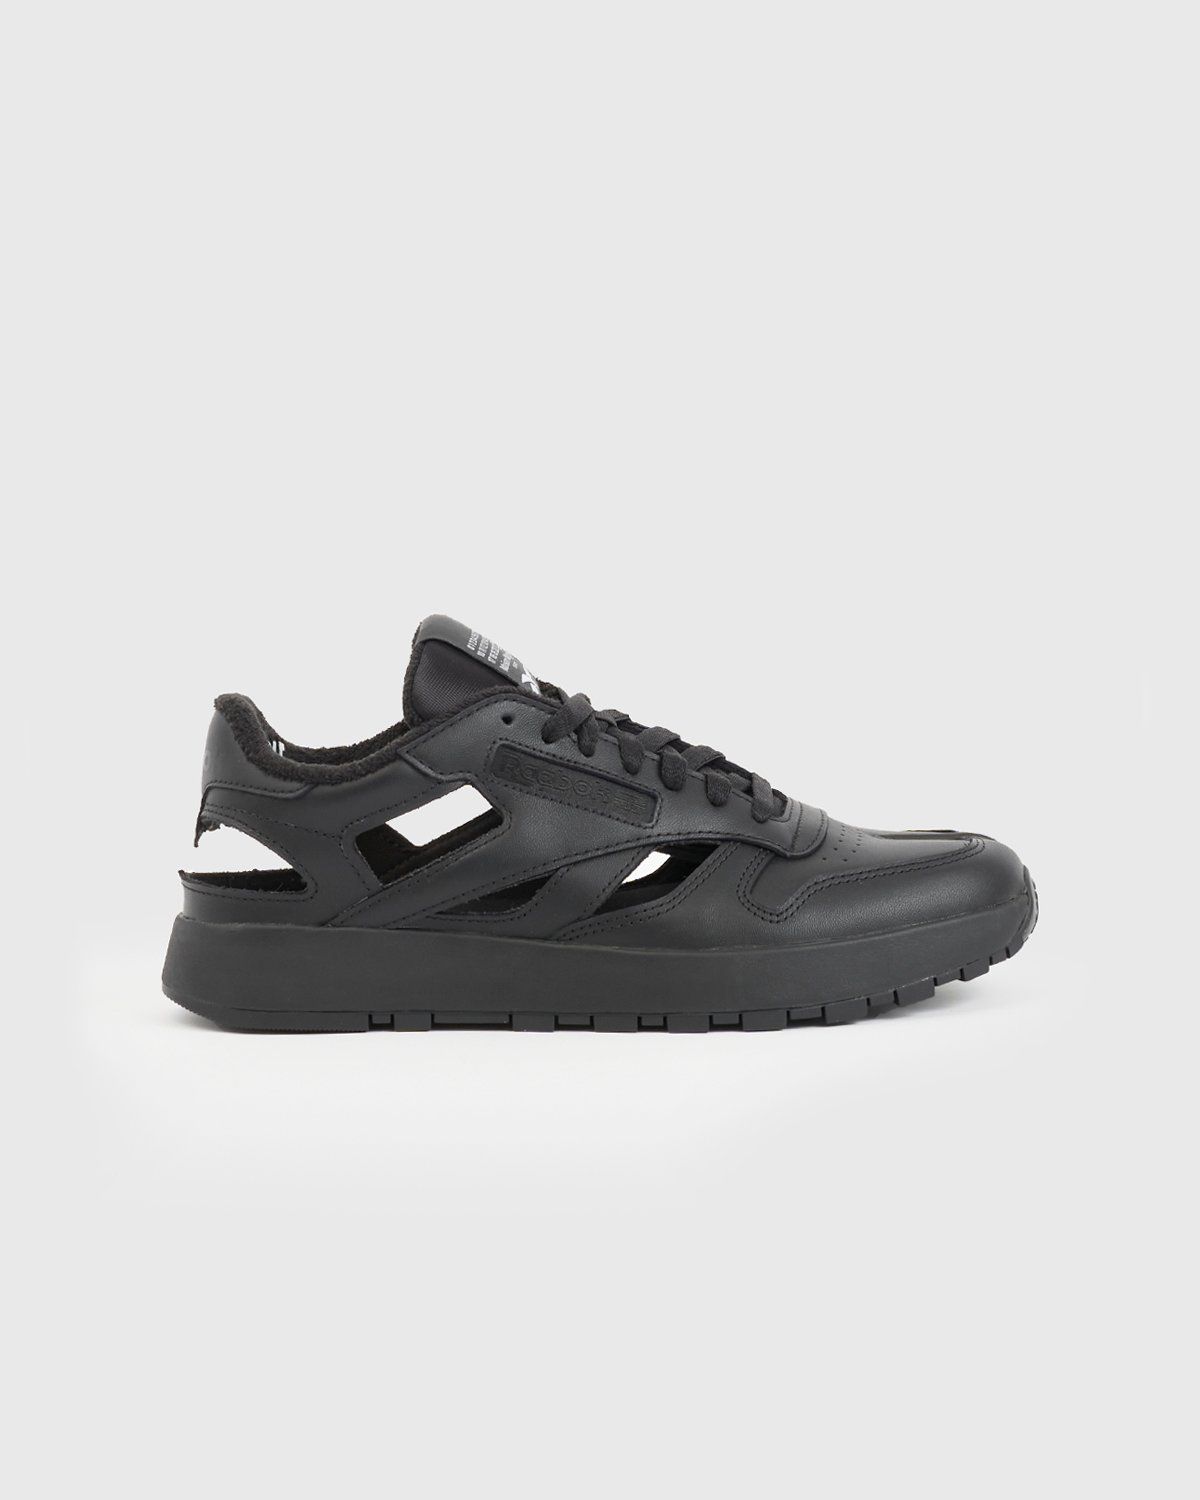 Maison Margiela x Reebok – Classic Leather Tabi Low Black - Sneakers - Black - Image 1